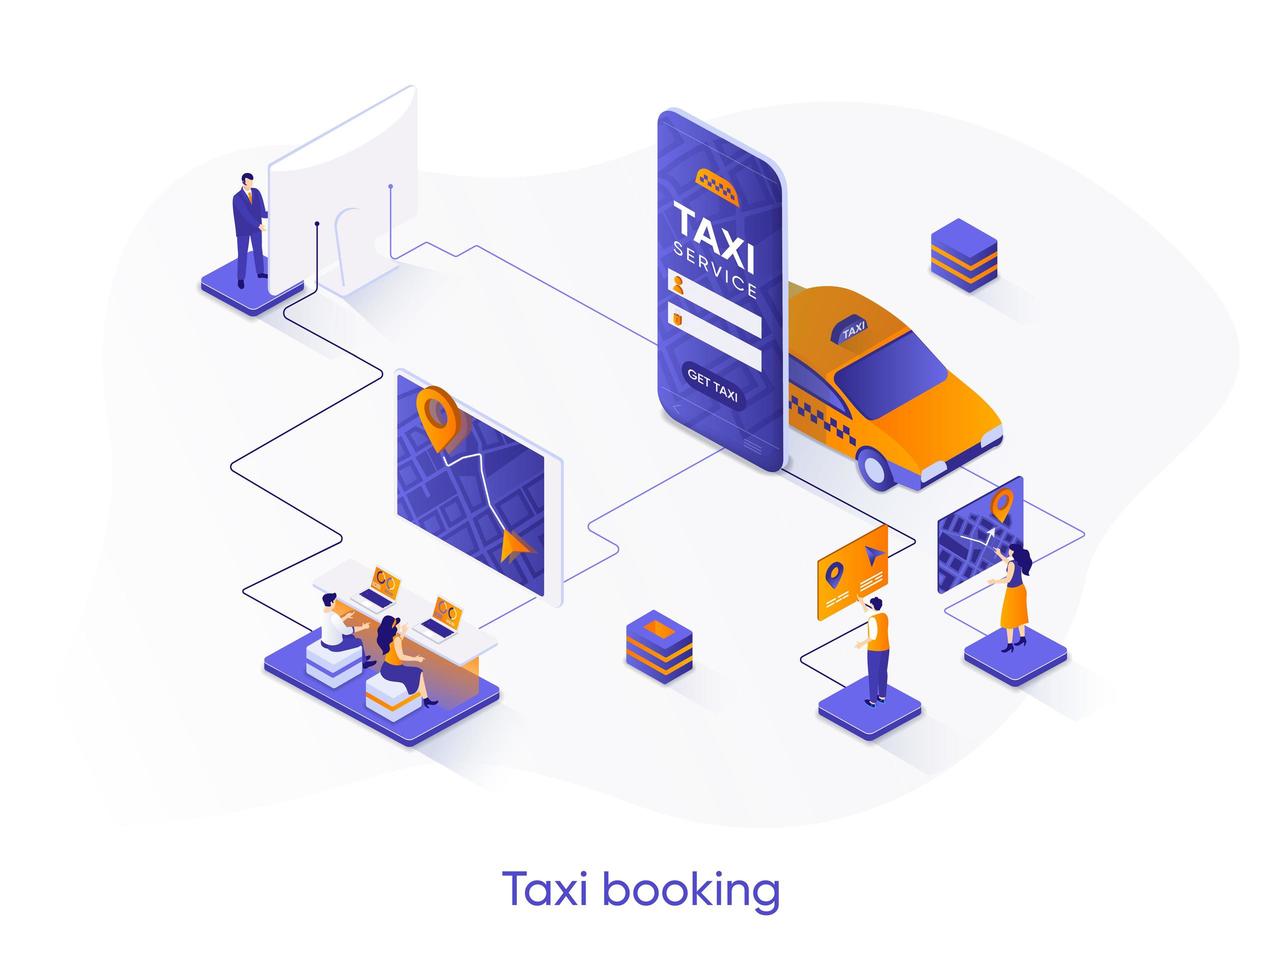 taxi bokning isometrisk webb banner. vektor